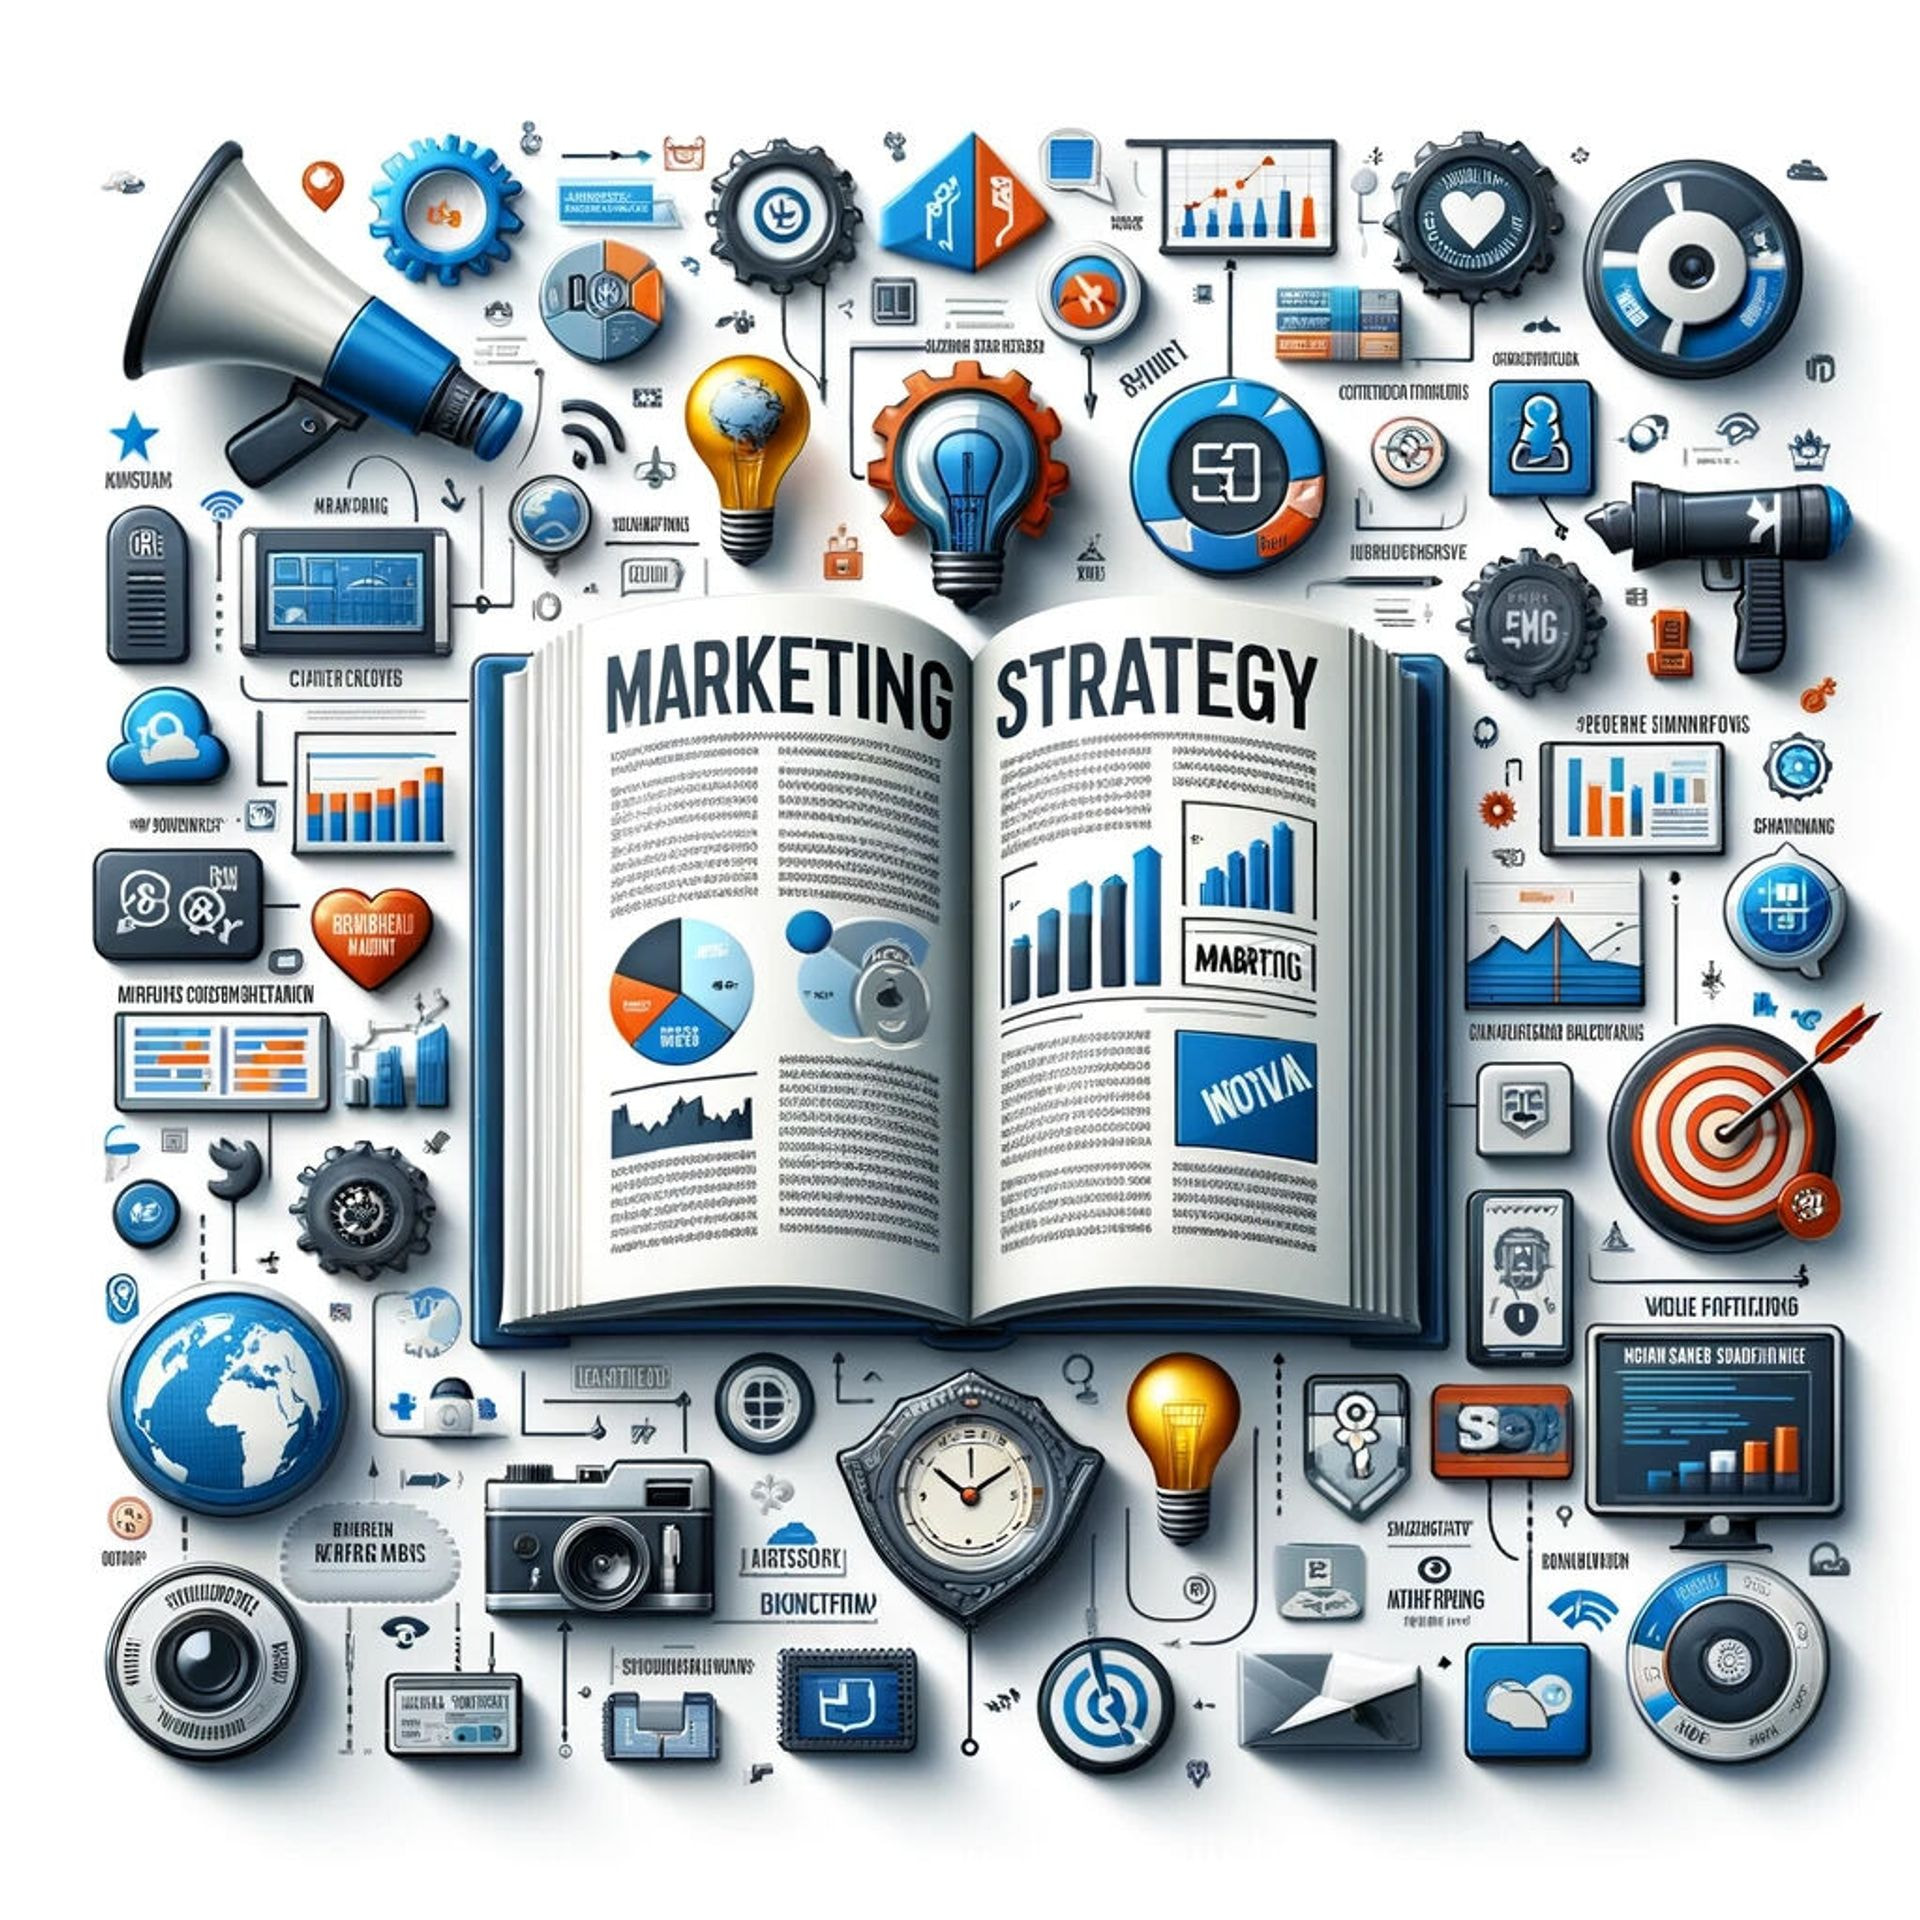 Marketing strategy generator